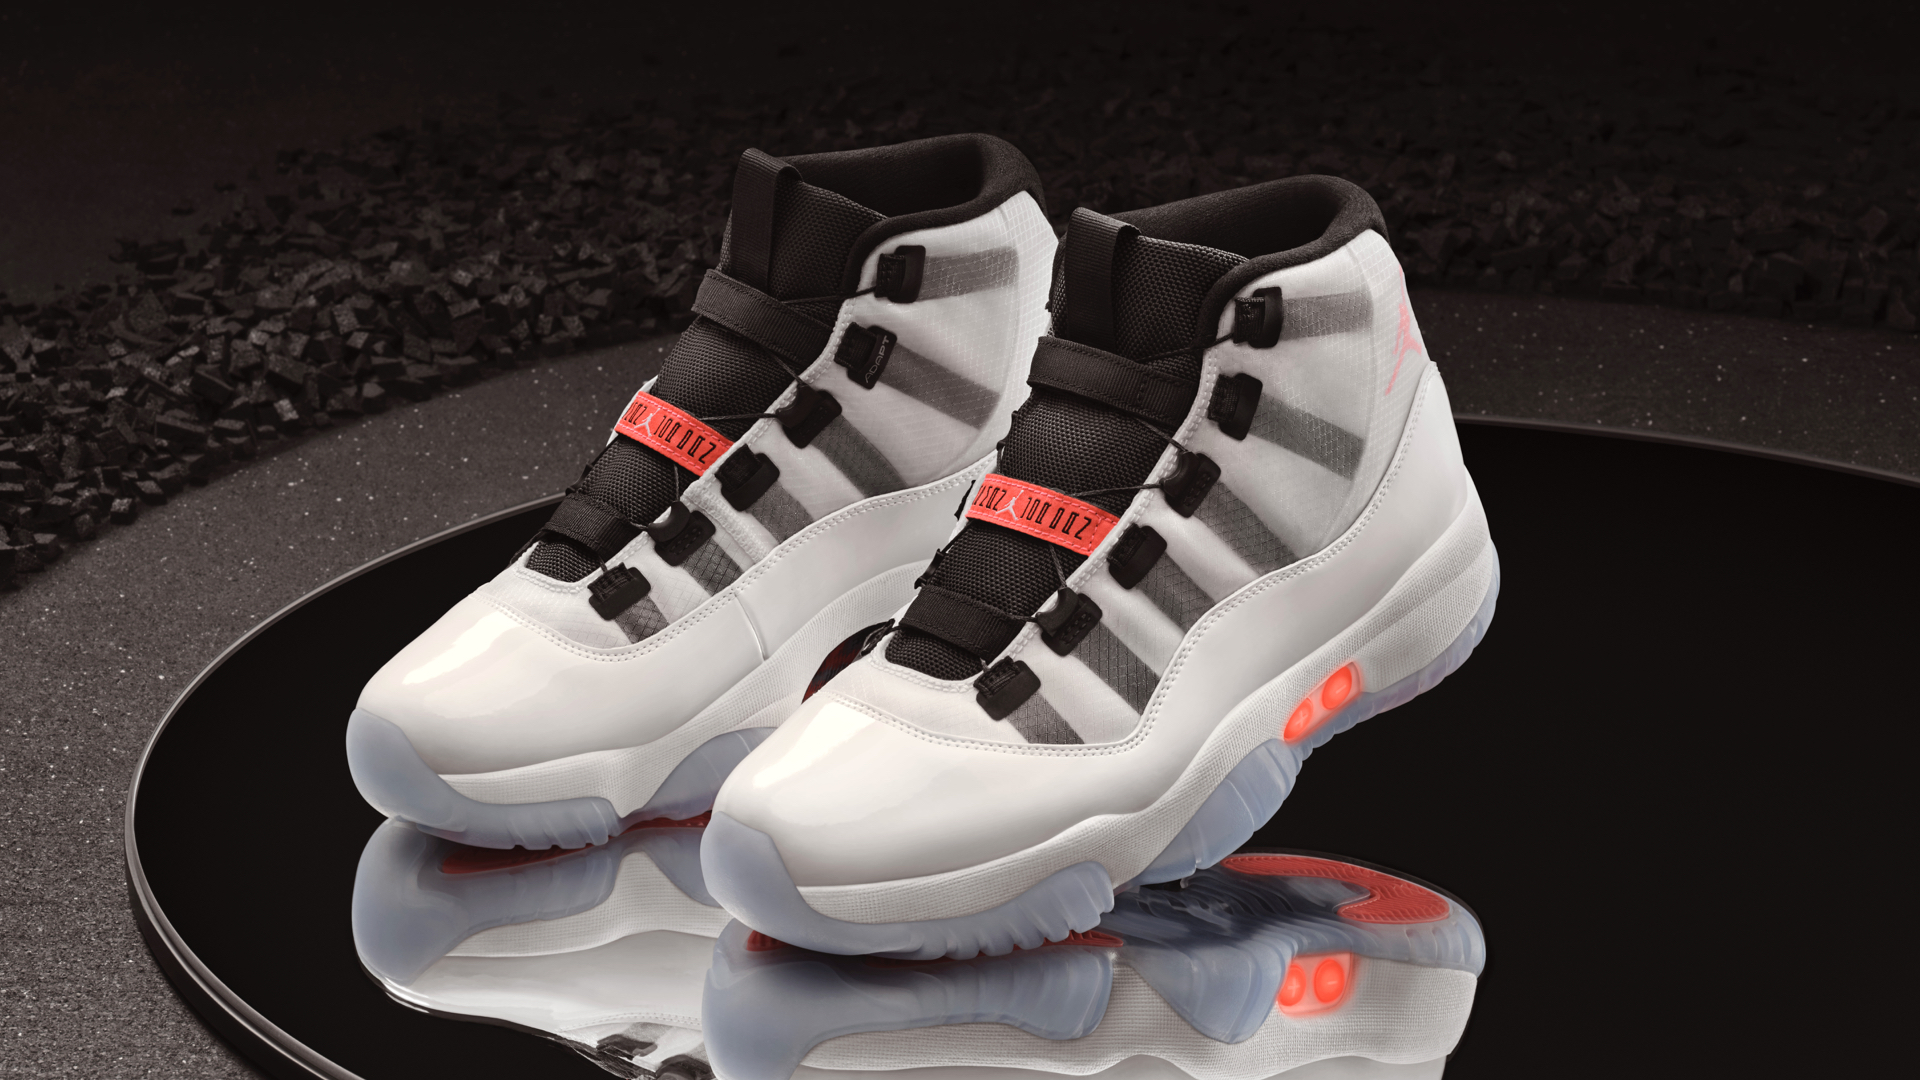 Jordan Brand Introduces First Self-Lacing Sneaker, The Air Jordan 11 Adapt